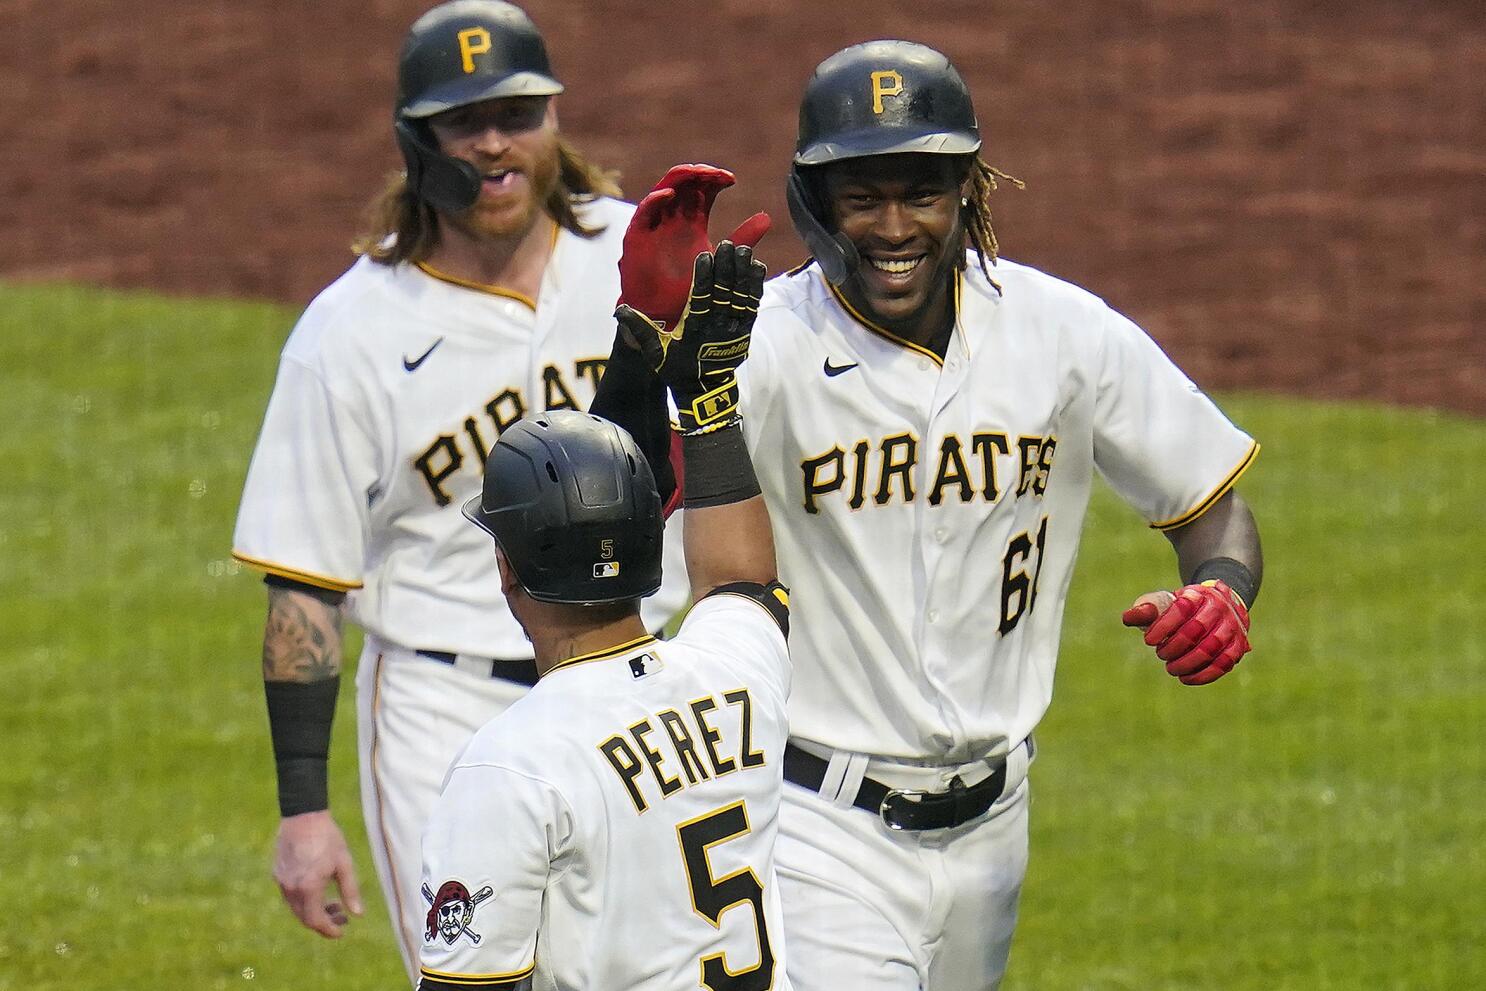 Towering Pirates shortstop Cruz aiming for big league spot